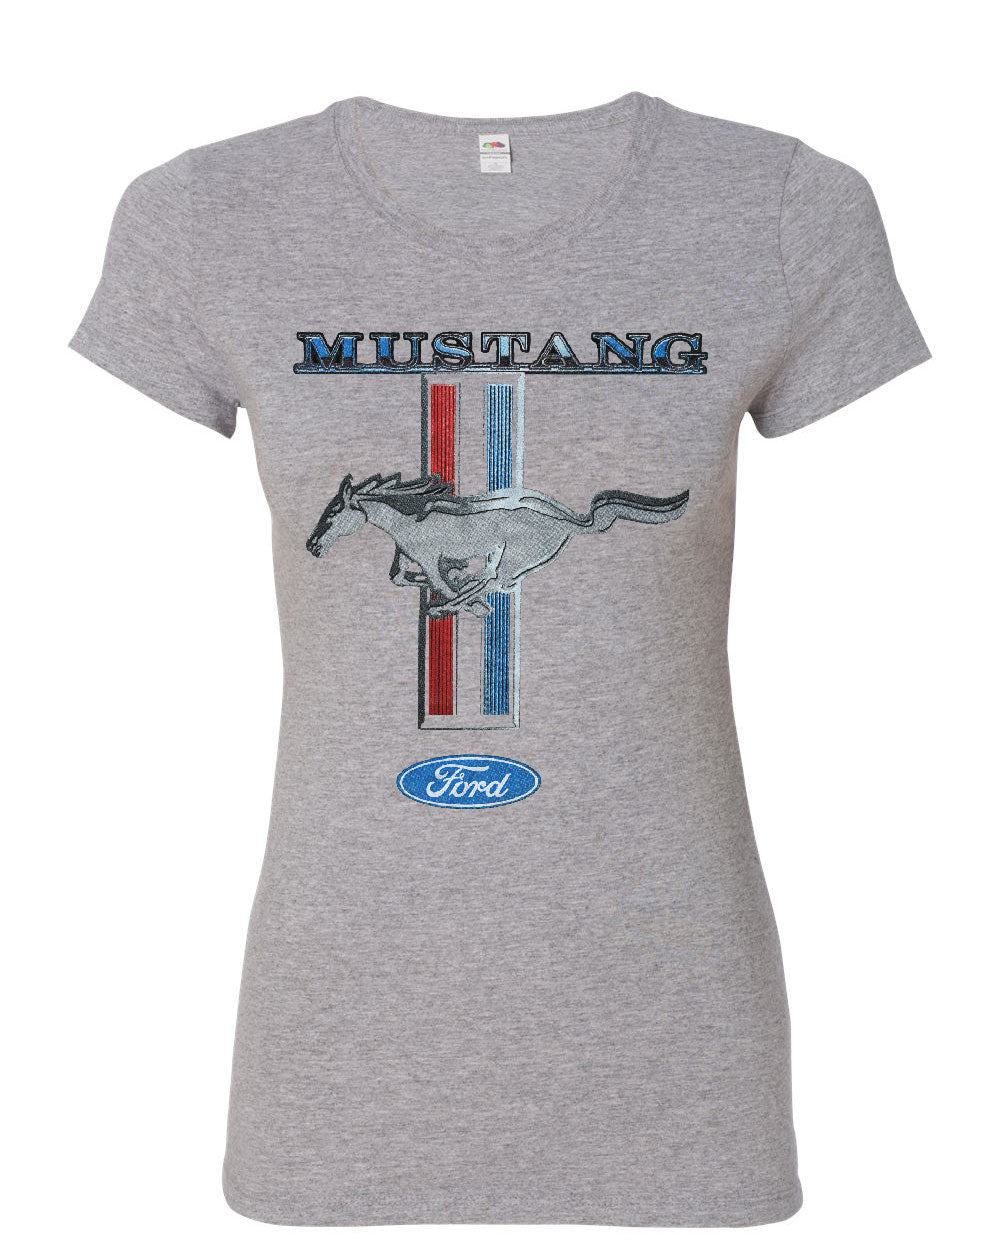 Ford Mustang Classic Women's T-Shirt | eBay